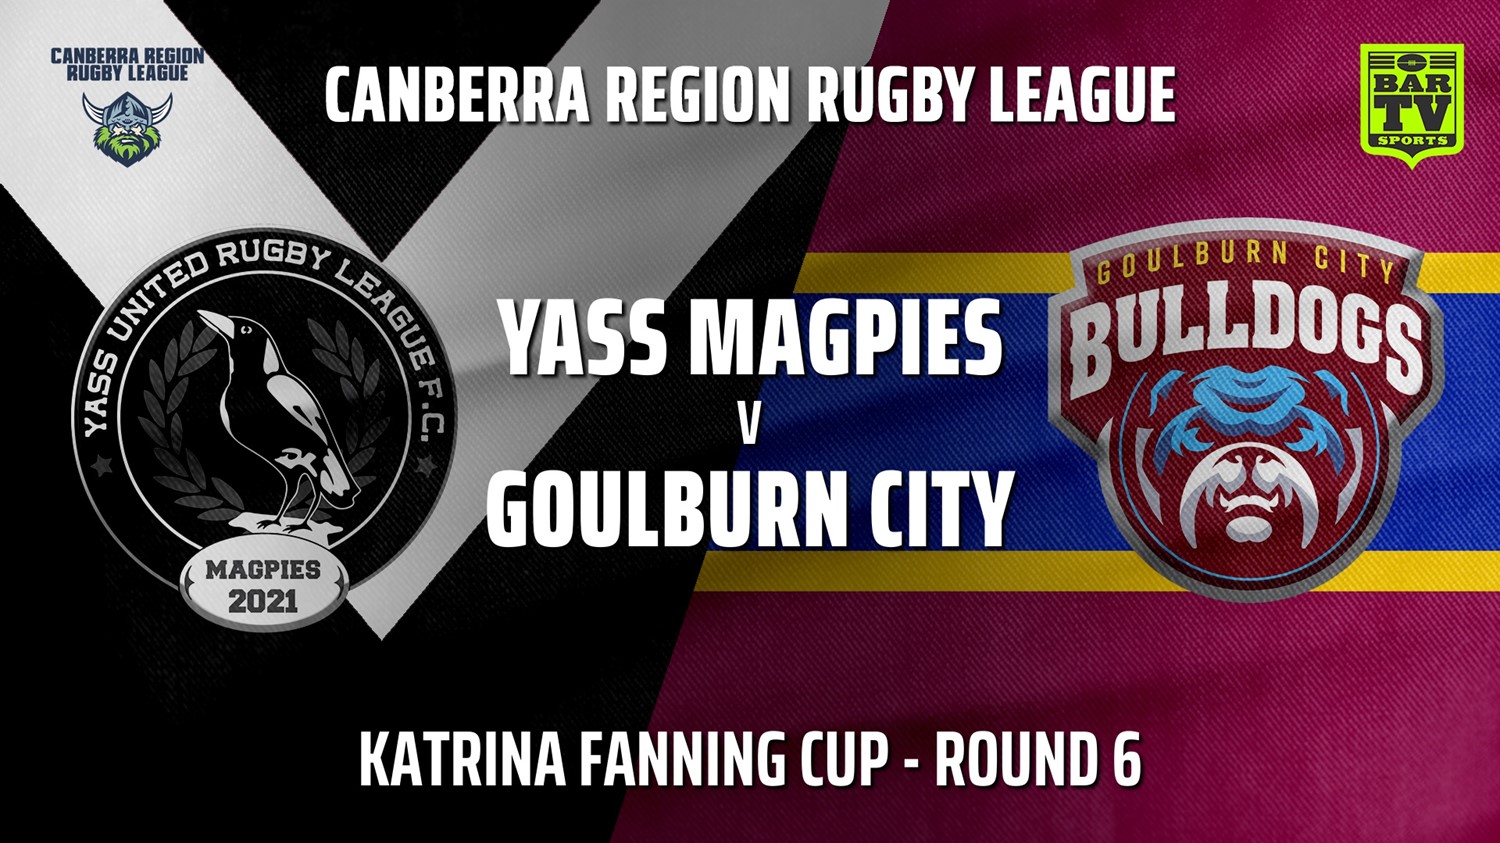 210605-CRRL Round 6 - Katrina Fanning Cup - Yass Magpies v Goulburn City Bulldogs Minigame Slate Image